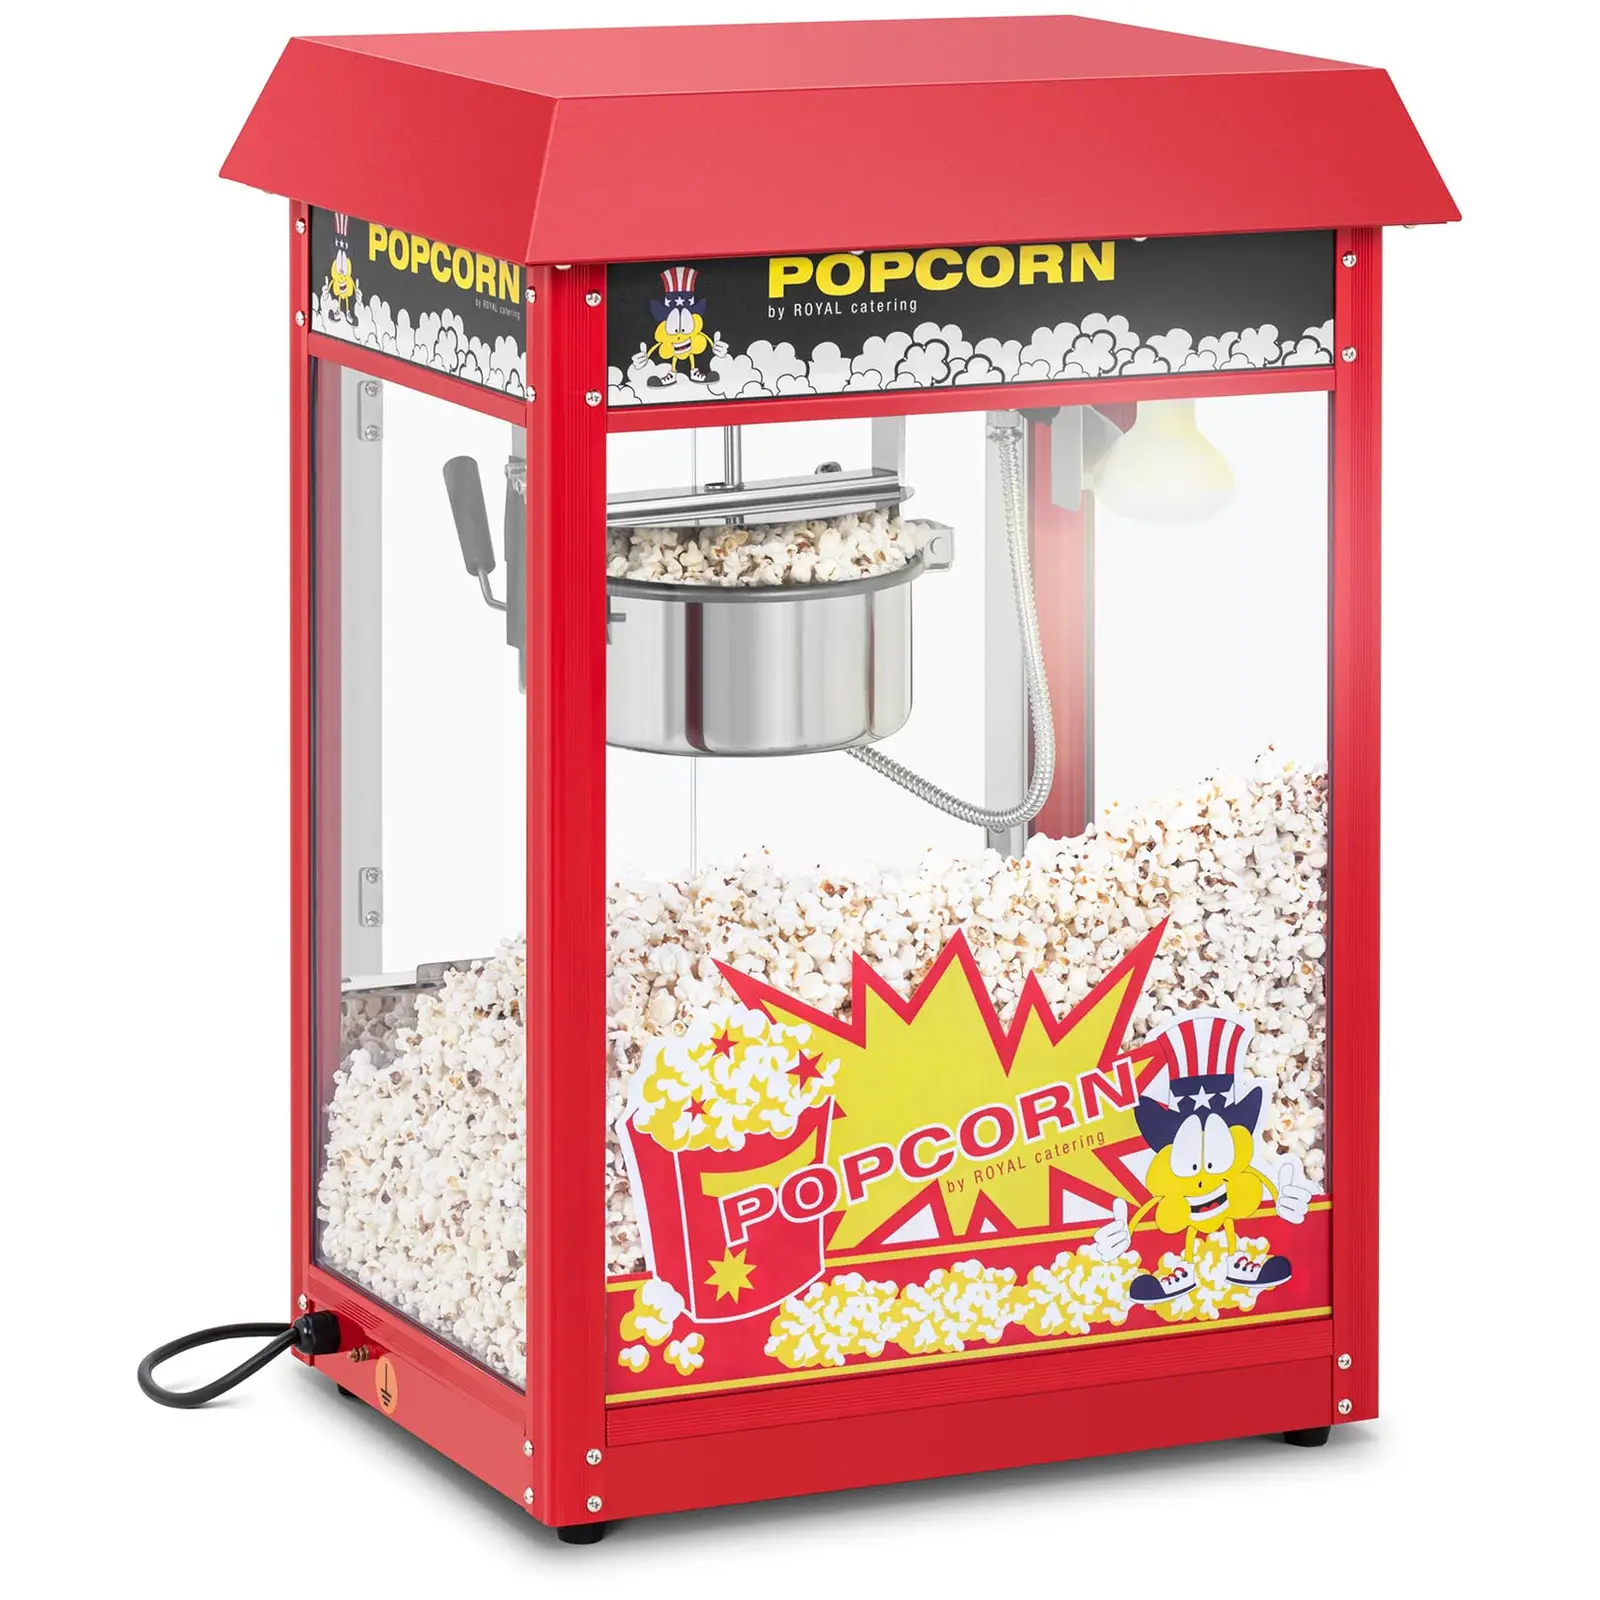 Popcornmaskin - retrodesign - 150 / 180 °C - rød - Royal Catering